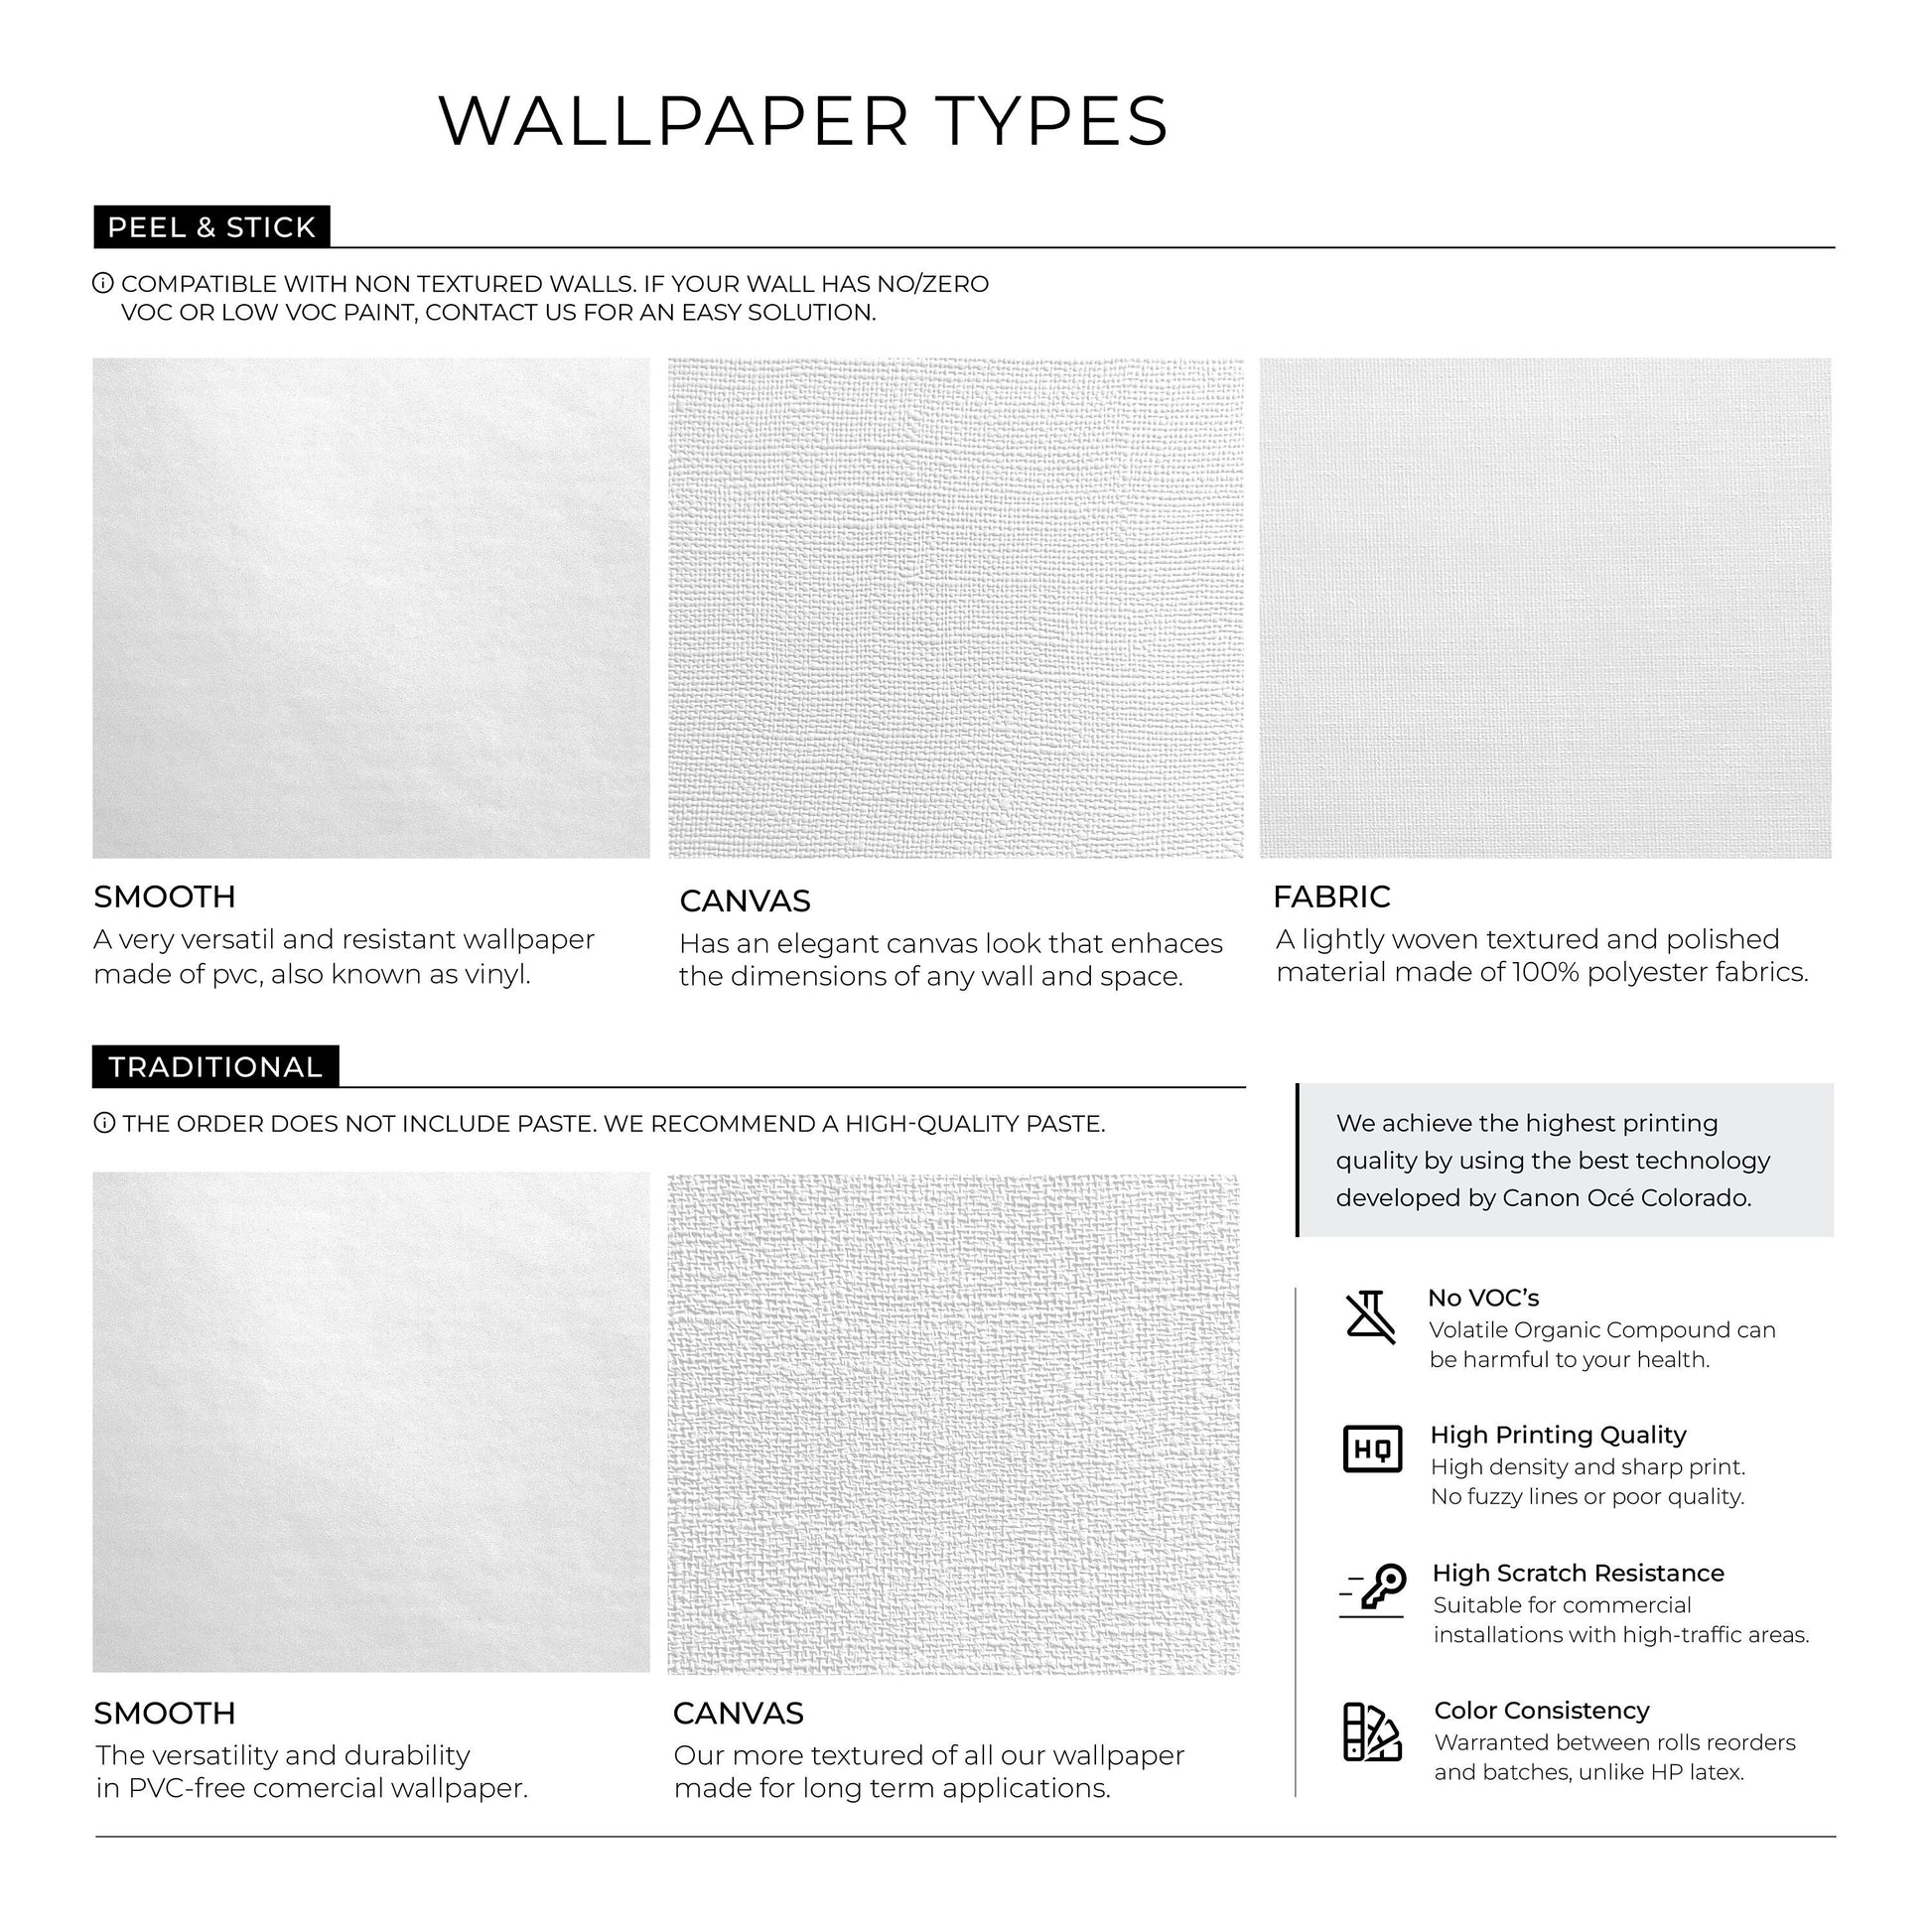 Removable Wallpaper Wall Temporary Wallpaper Wallpaper Wall Decor Wall Paper Removable Peel and Stick Wallpaper - B437